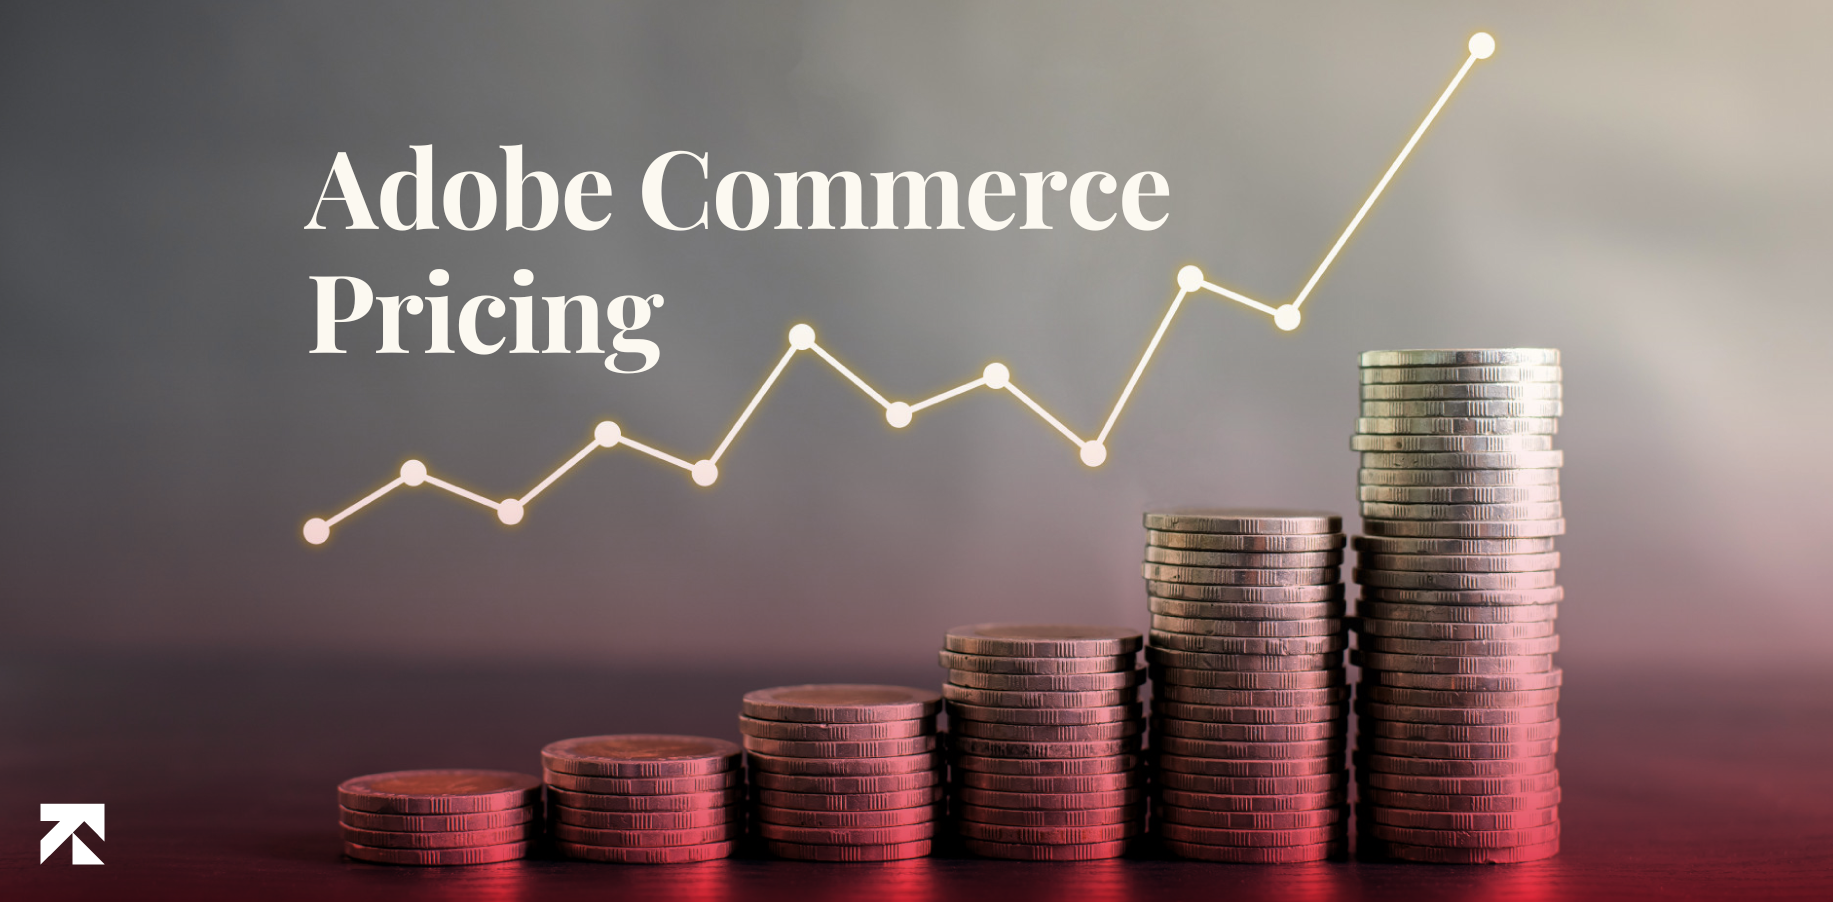 Adobe Commerce Pricing